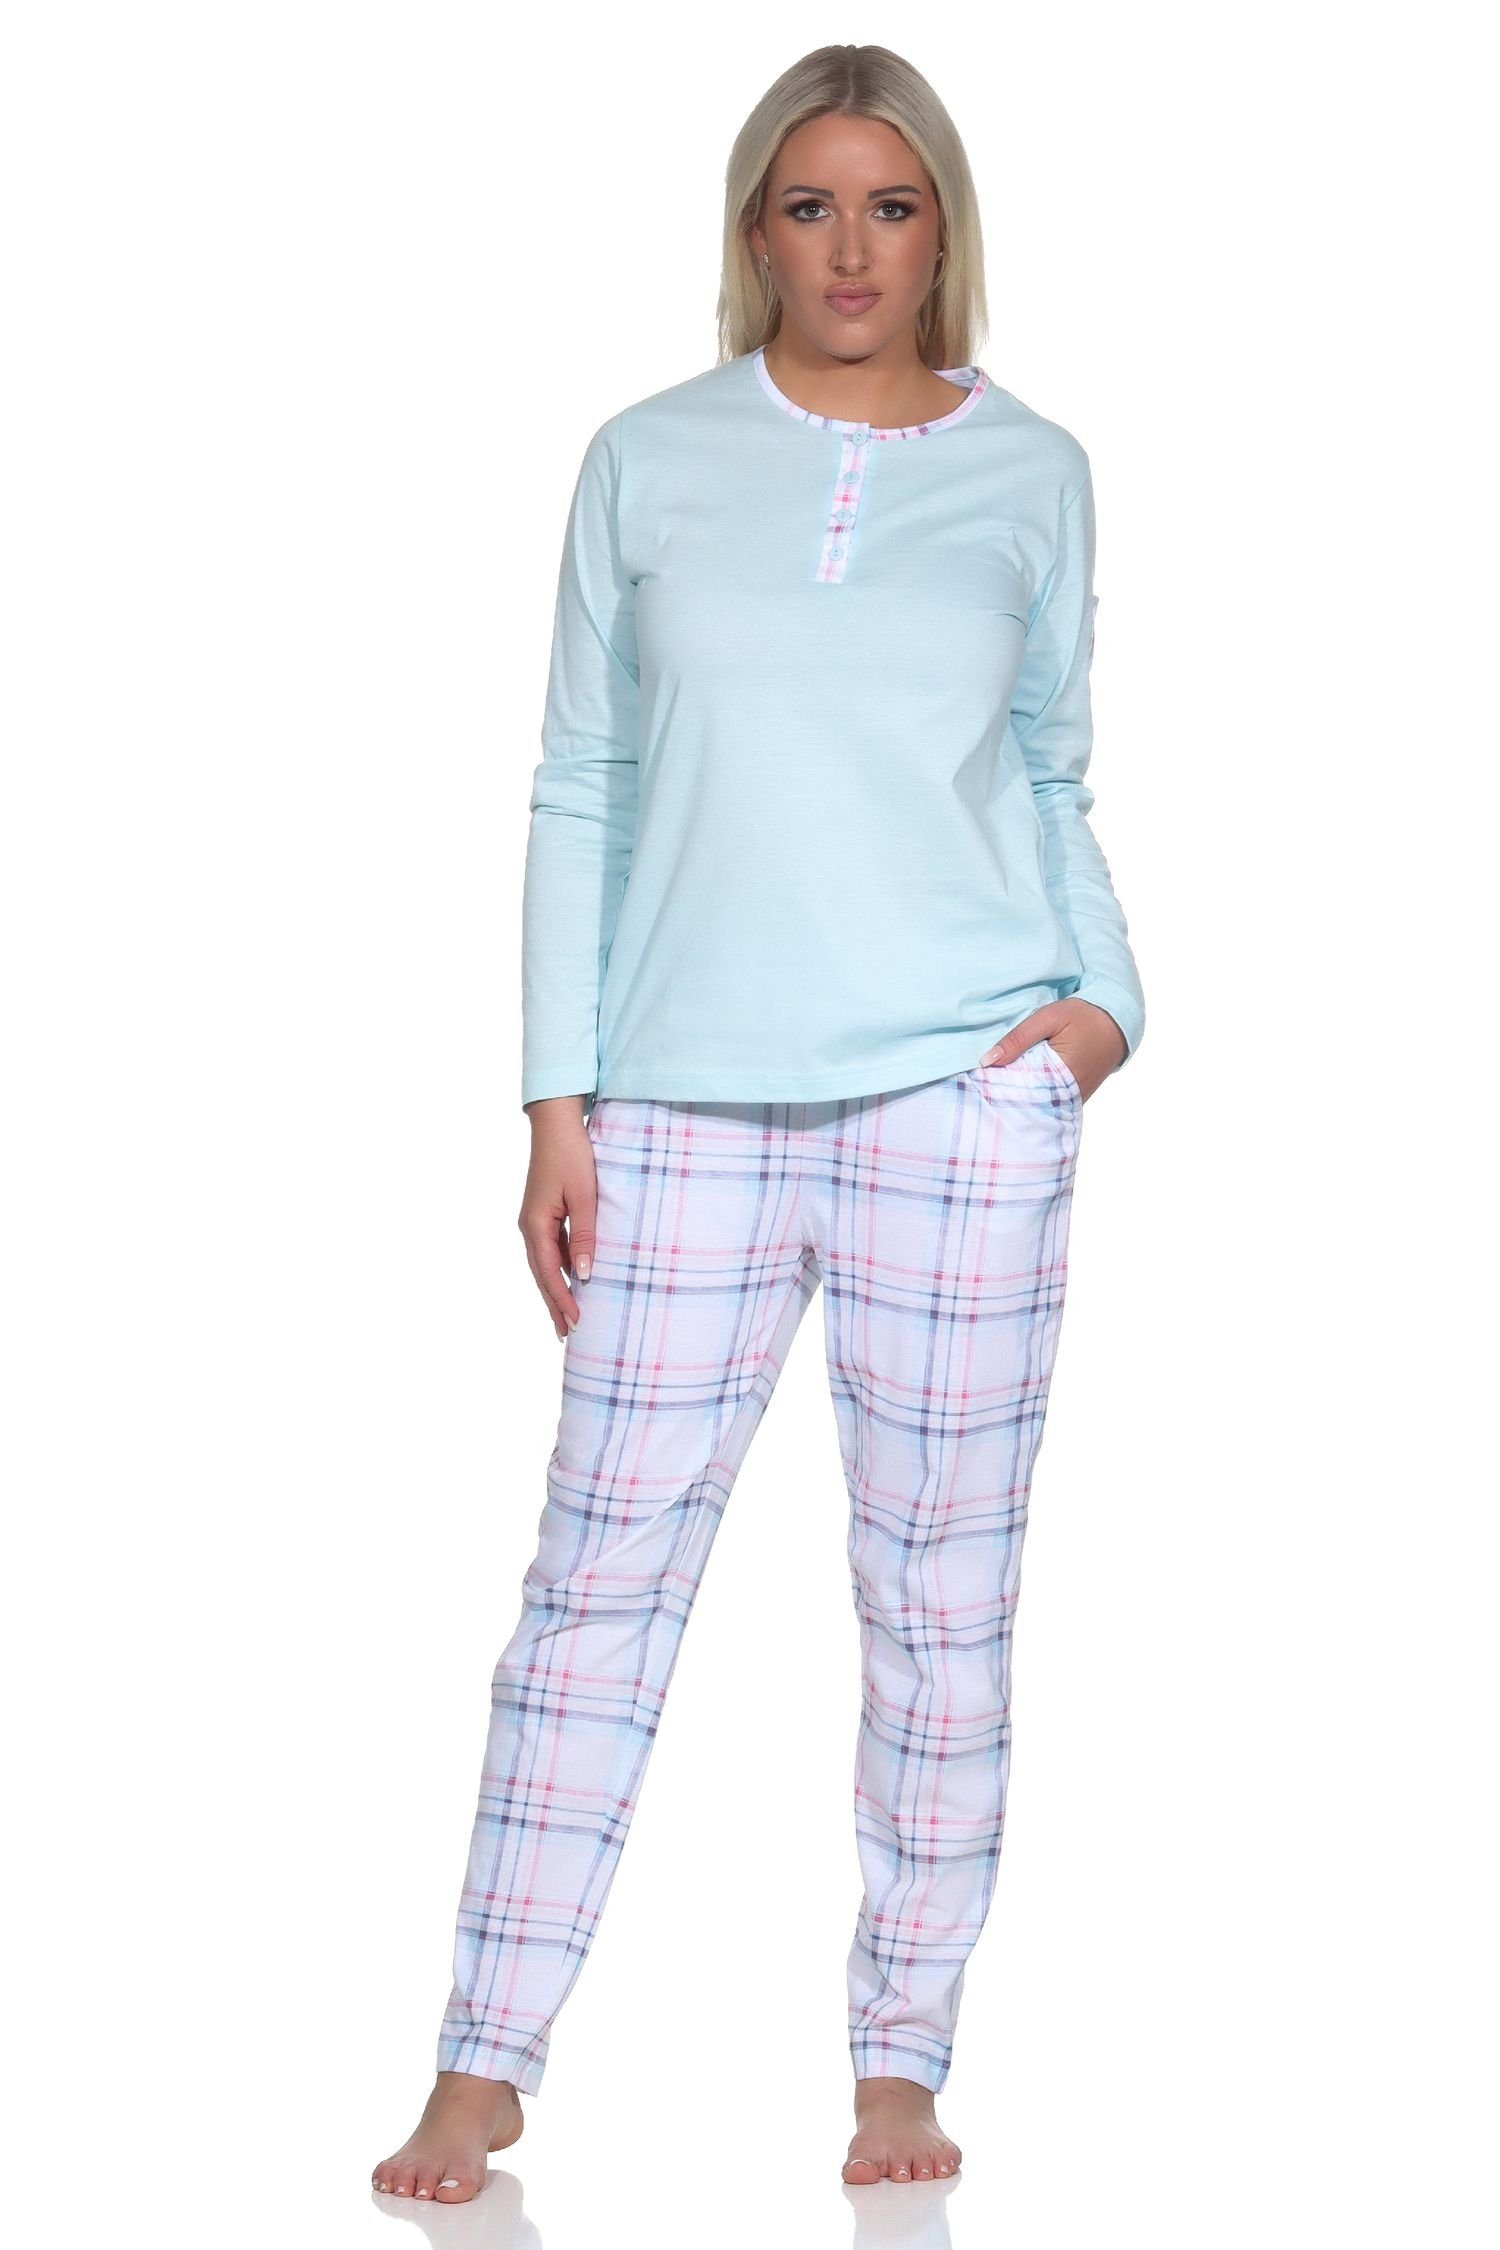 hellblau langarm mit karierter Pyjama Damen Jersey aus Hose Normann Schlafanzug Pyjama